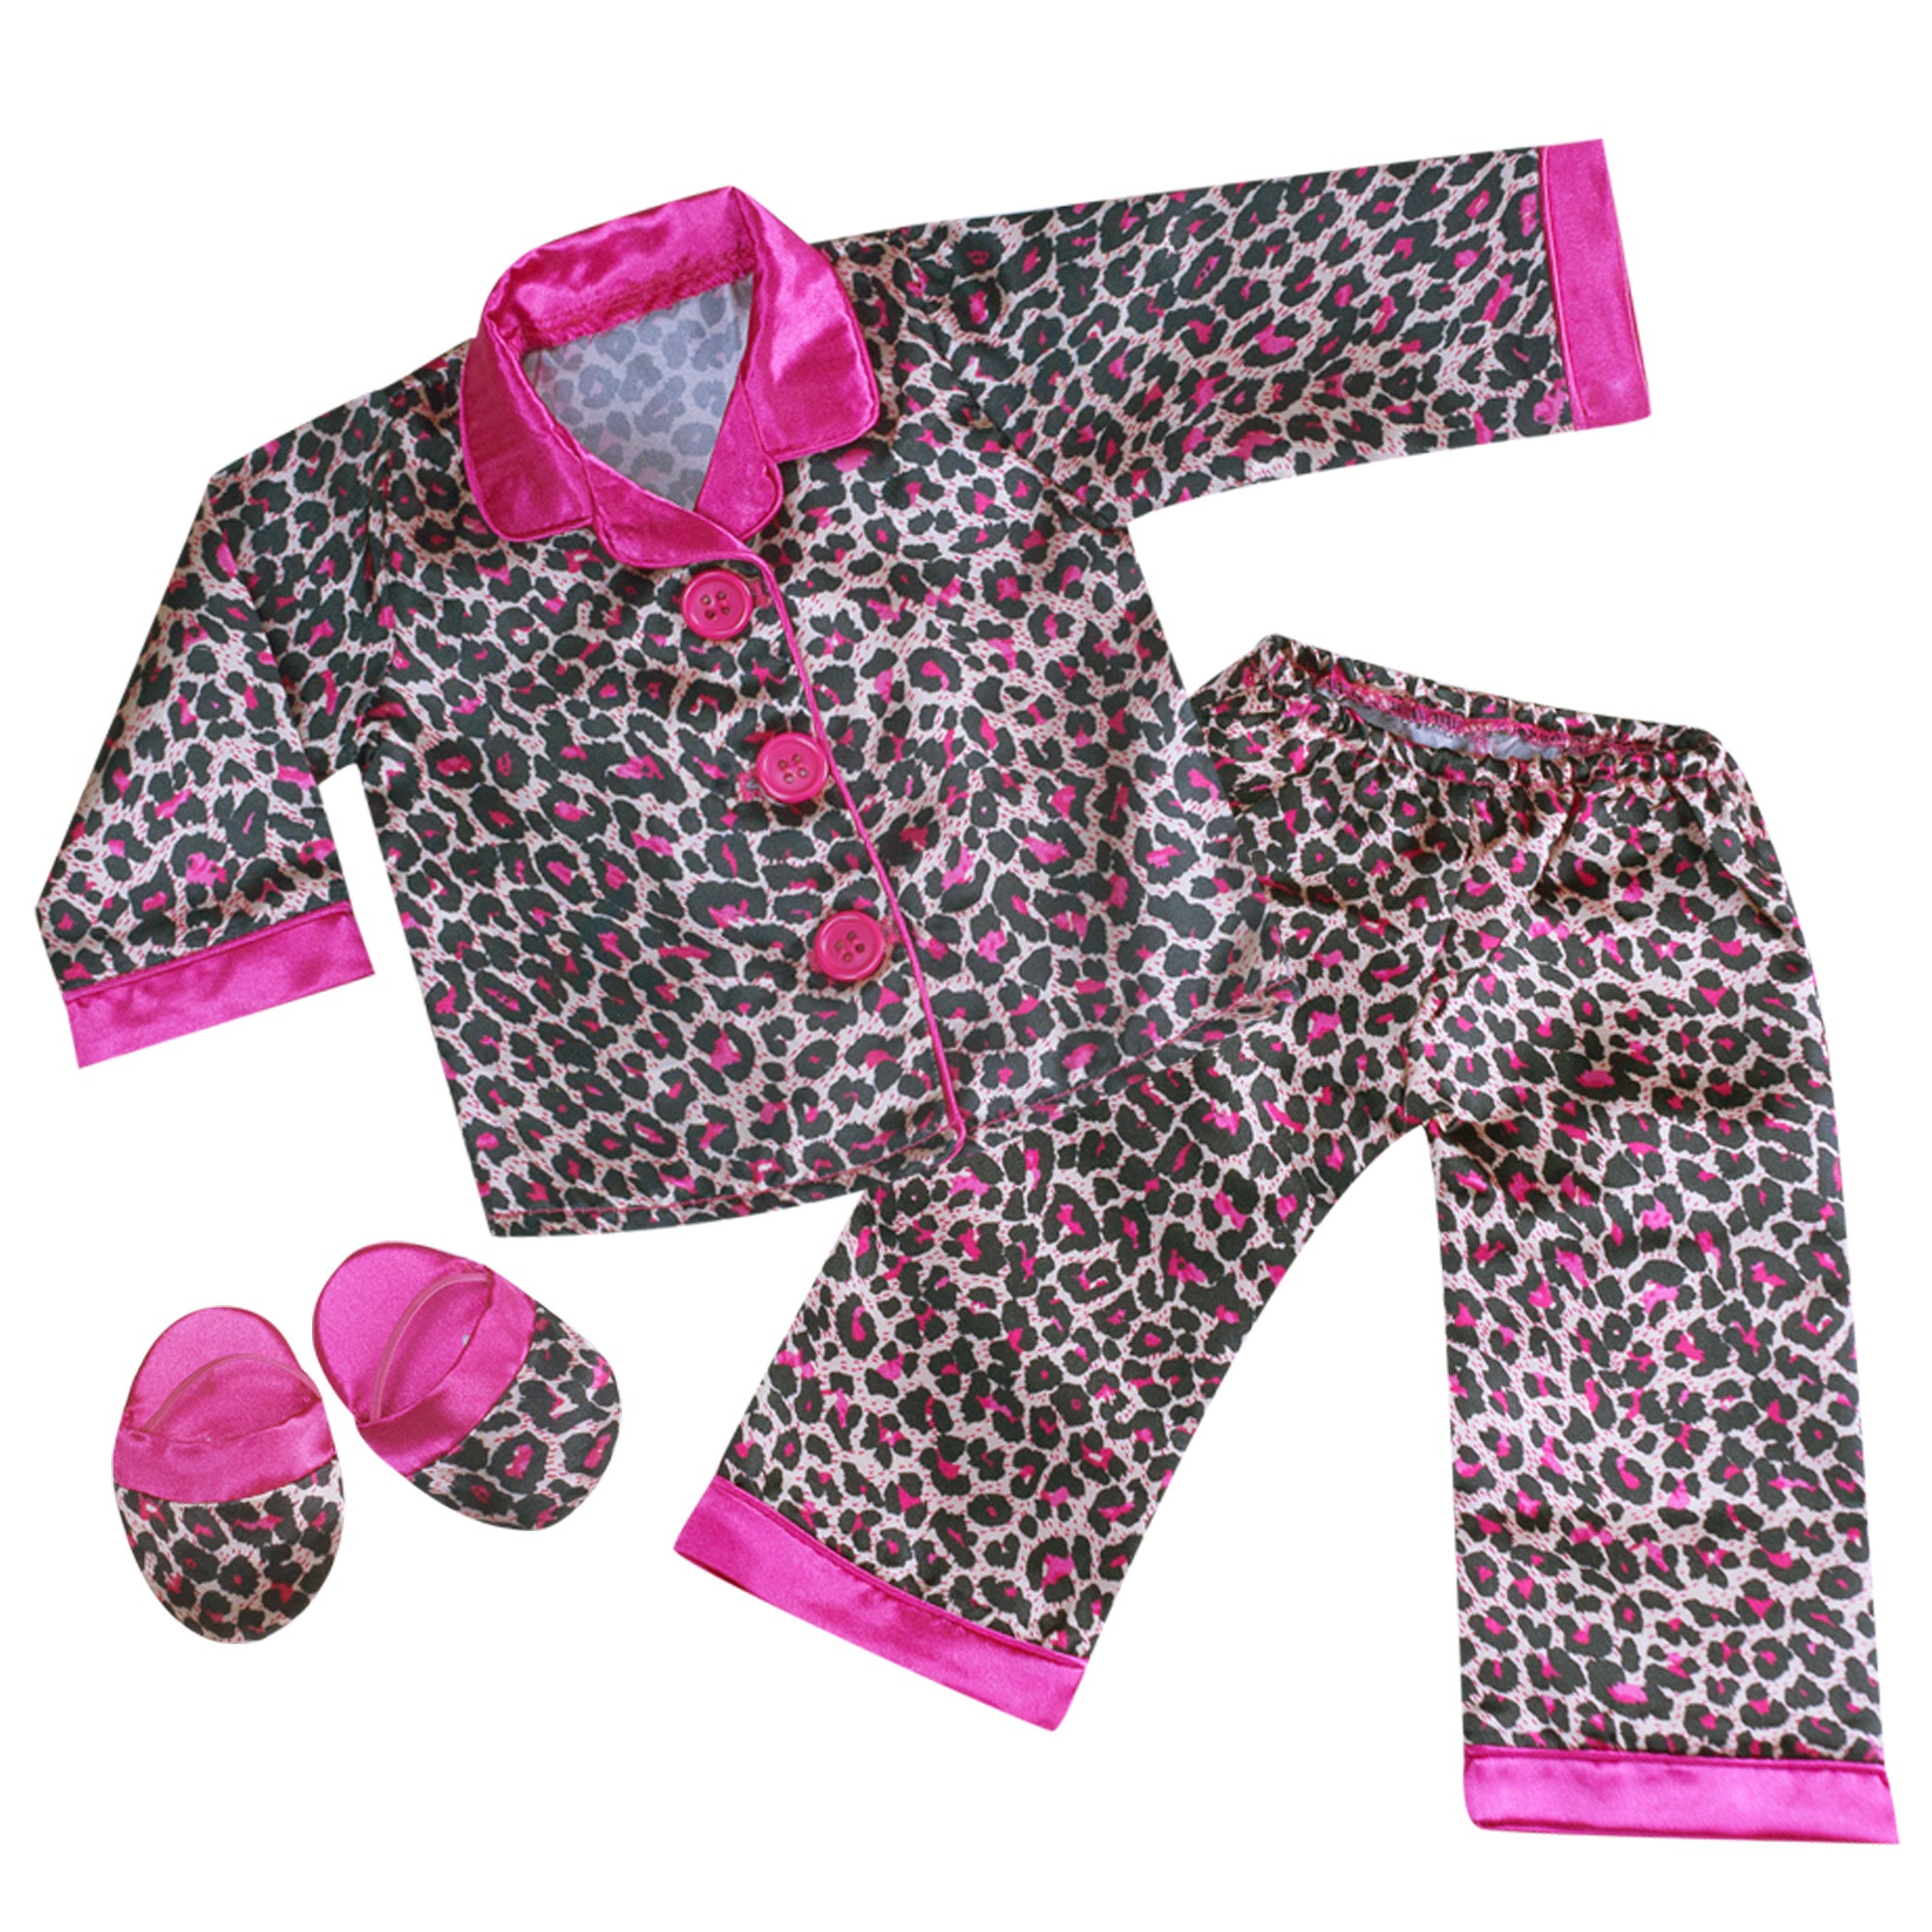 Sophia's Animal Print Pajama Shirt, Pants and Slippers for 18" Dolls, Pink/Black